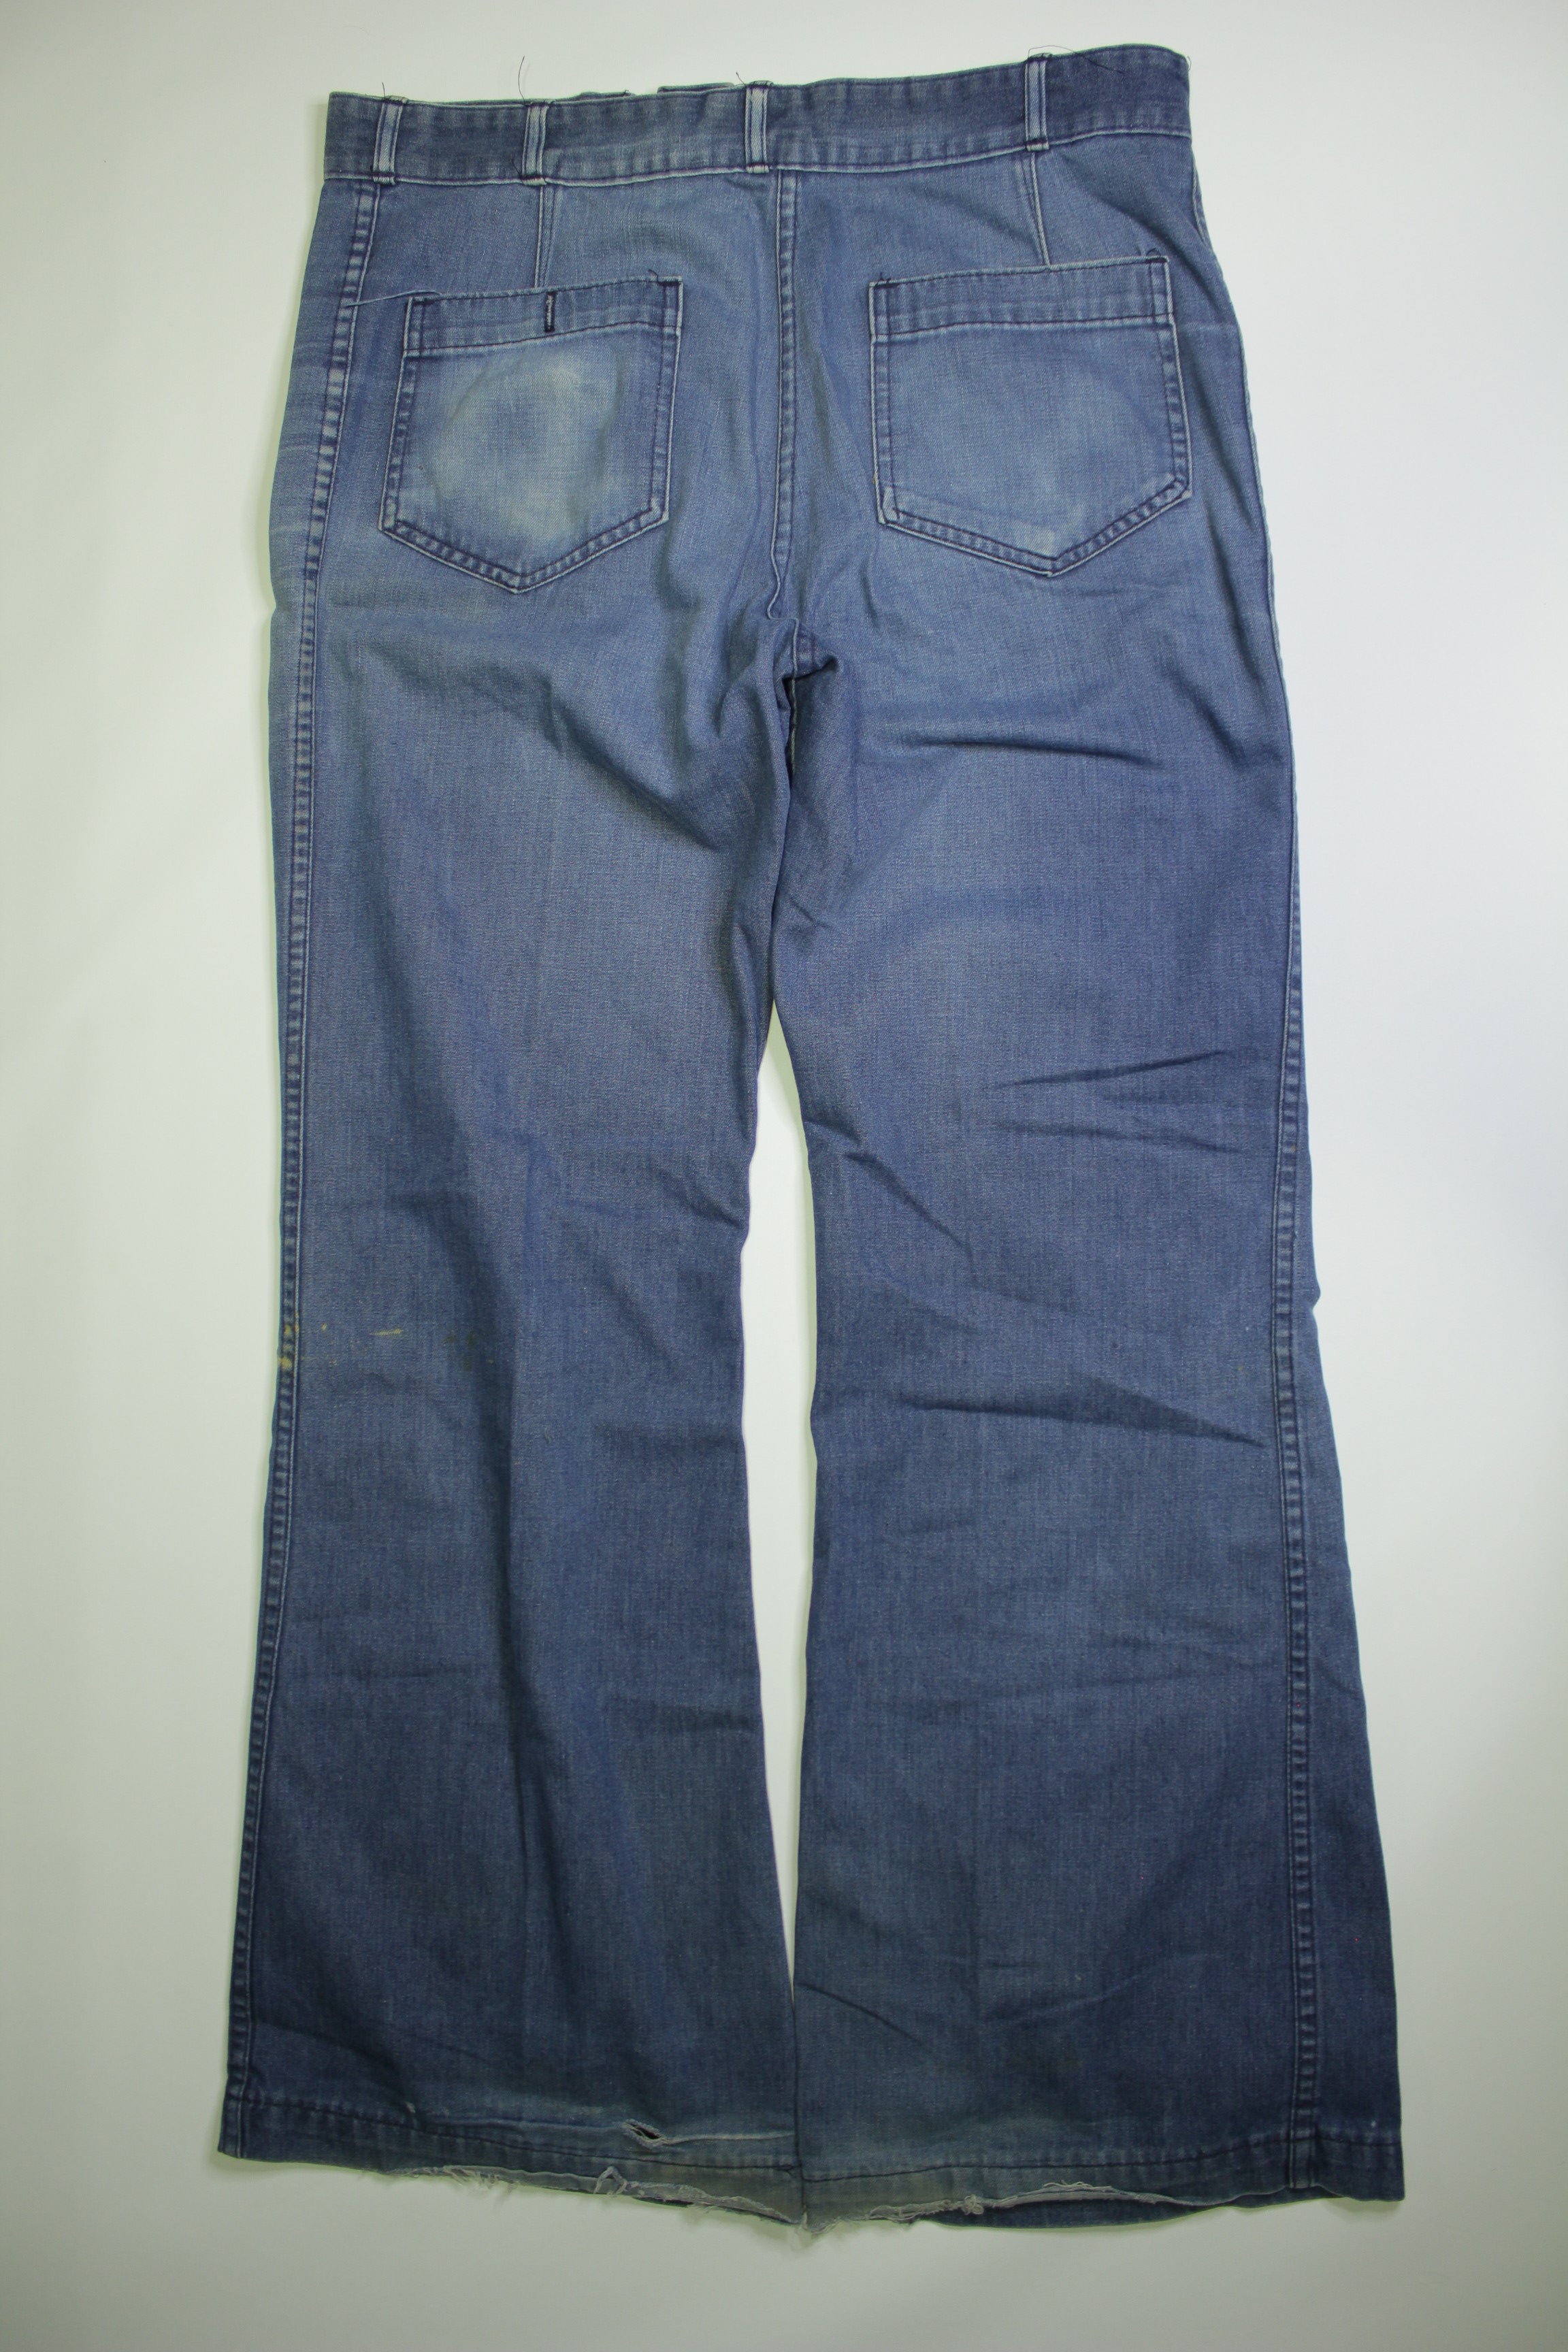 rustyzipper 32W 36L 40Hip - Sailor Navy Bellbottom Jeans Pants - New/Old Vintage Deadstock!